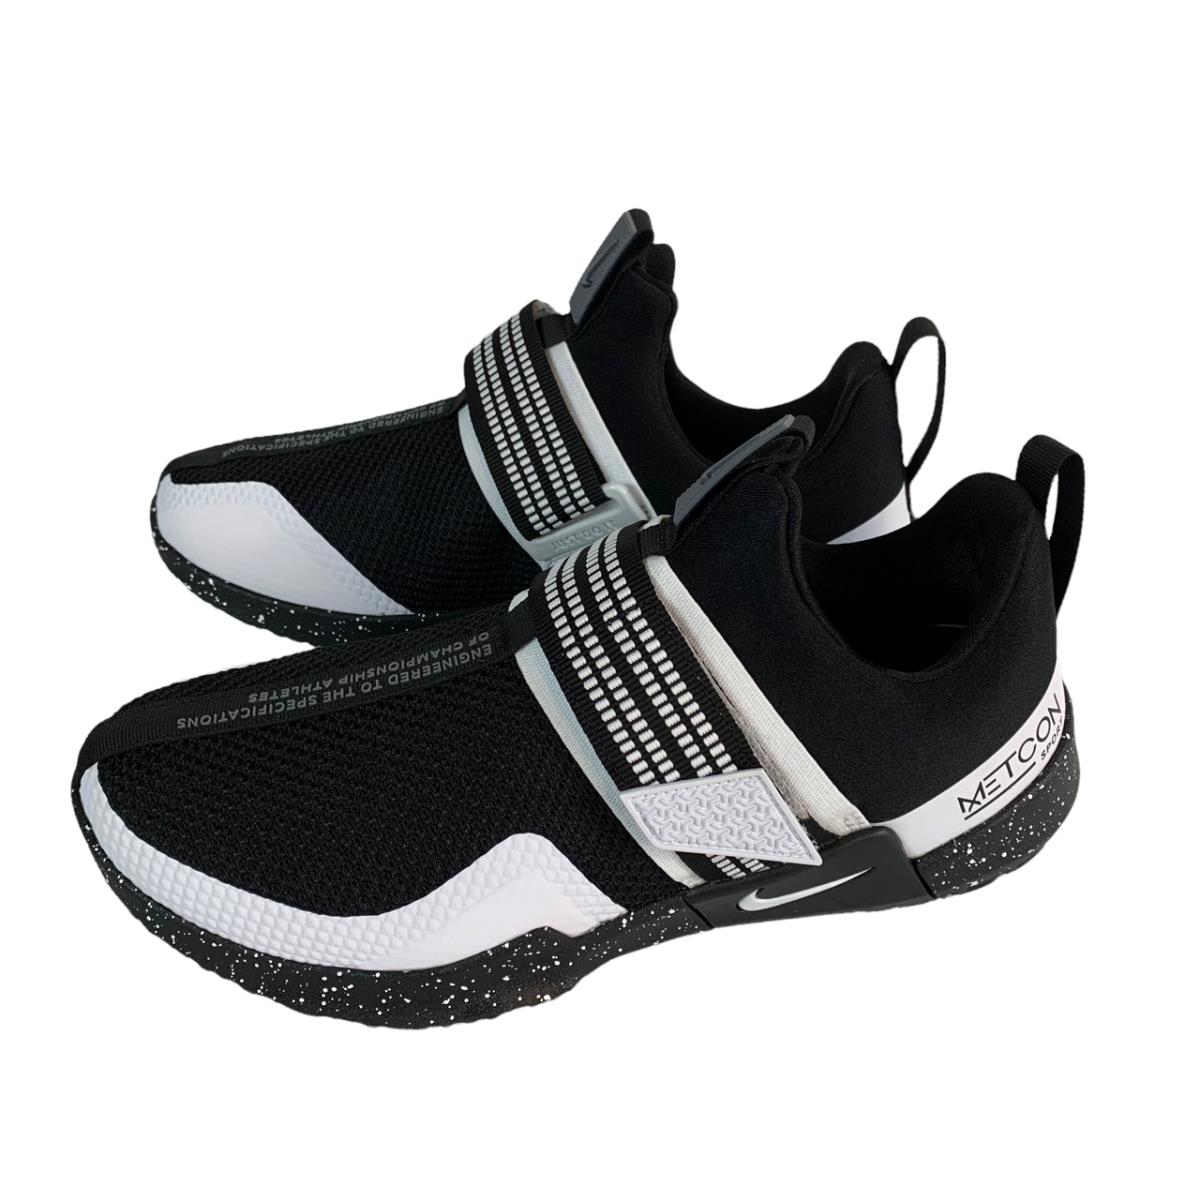 Nike Metcon Sport Men`s Crossfit/training Black/white Multi Sizes AQ7489 007 - Black